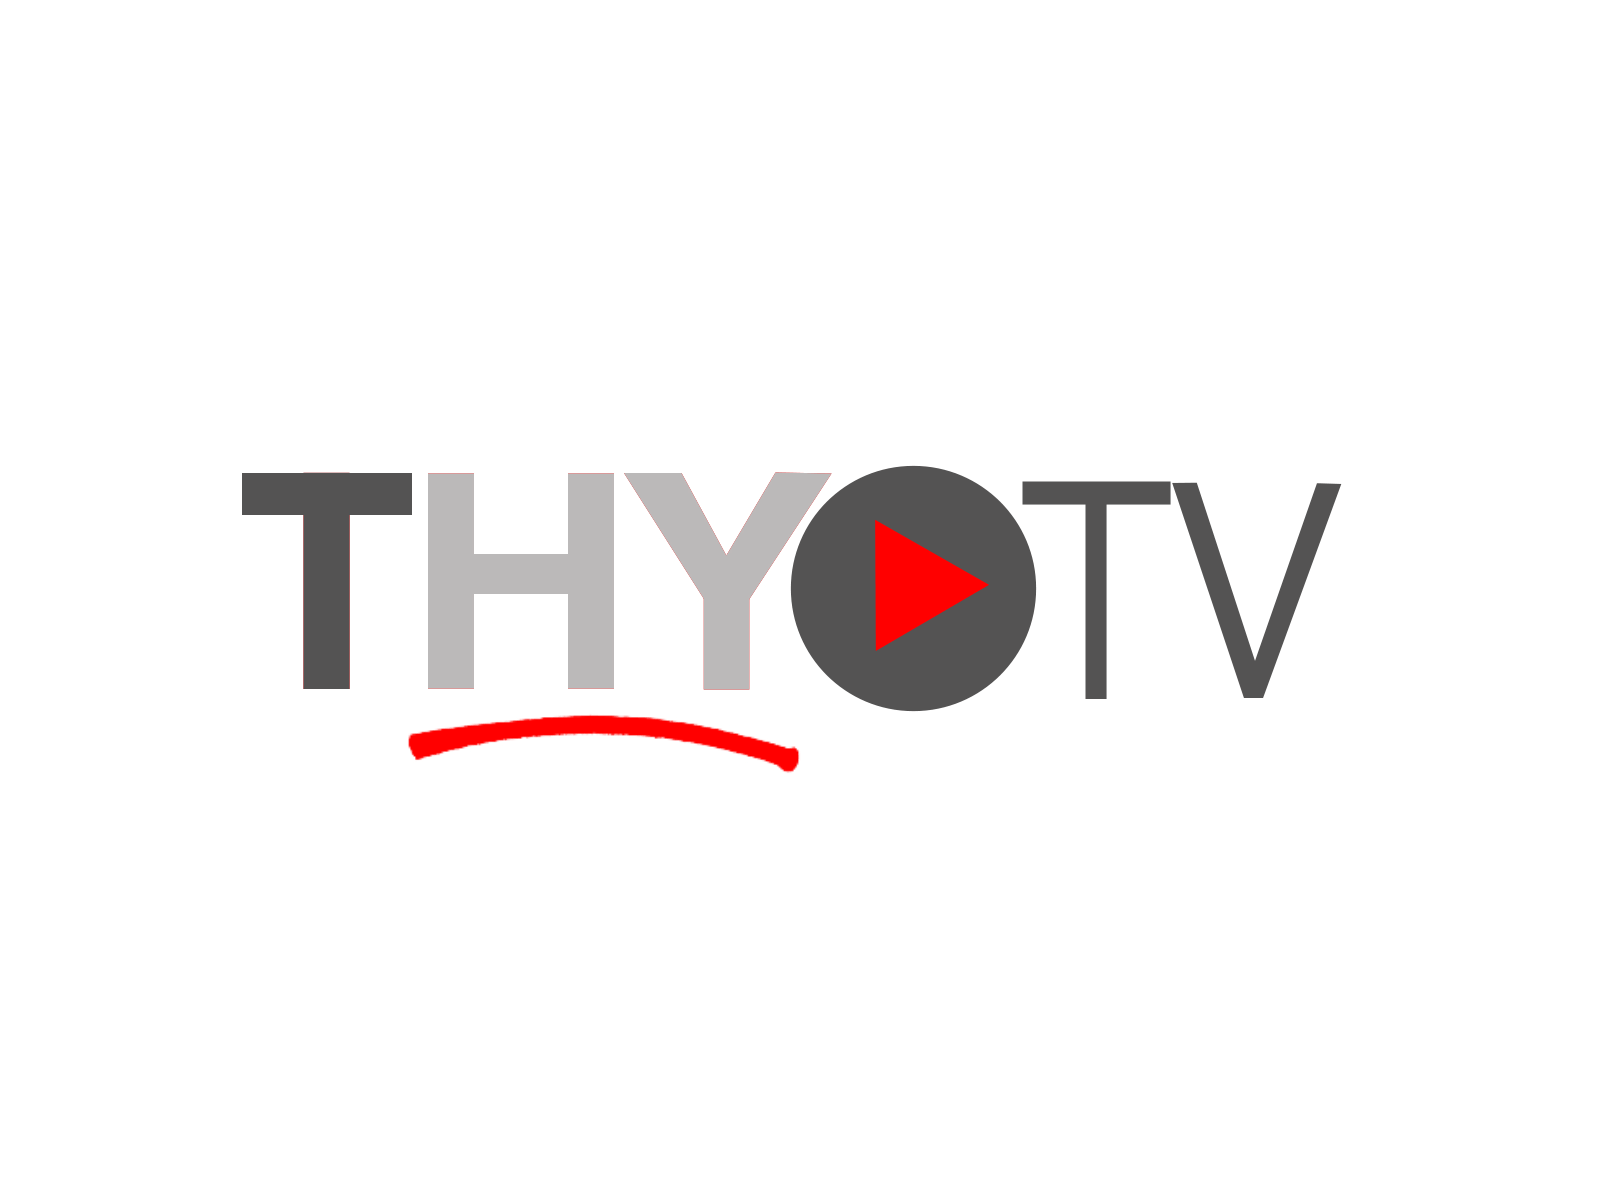 Thy tv logo animation